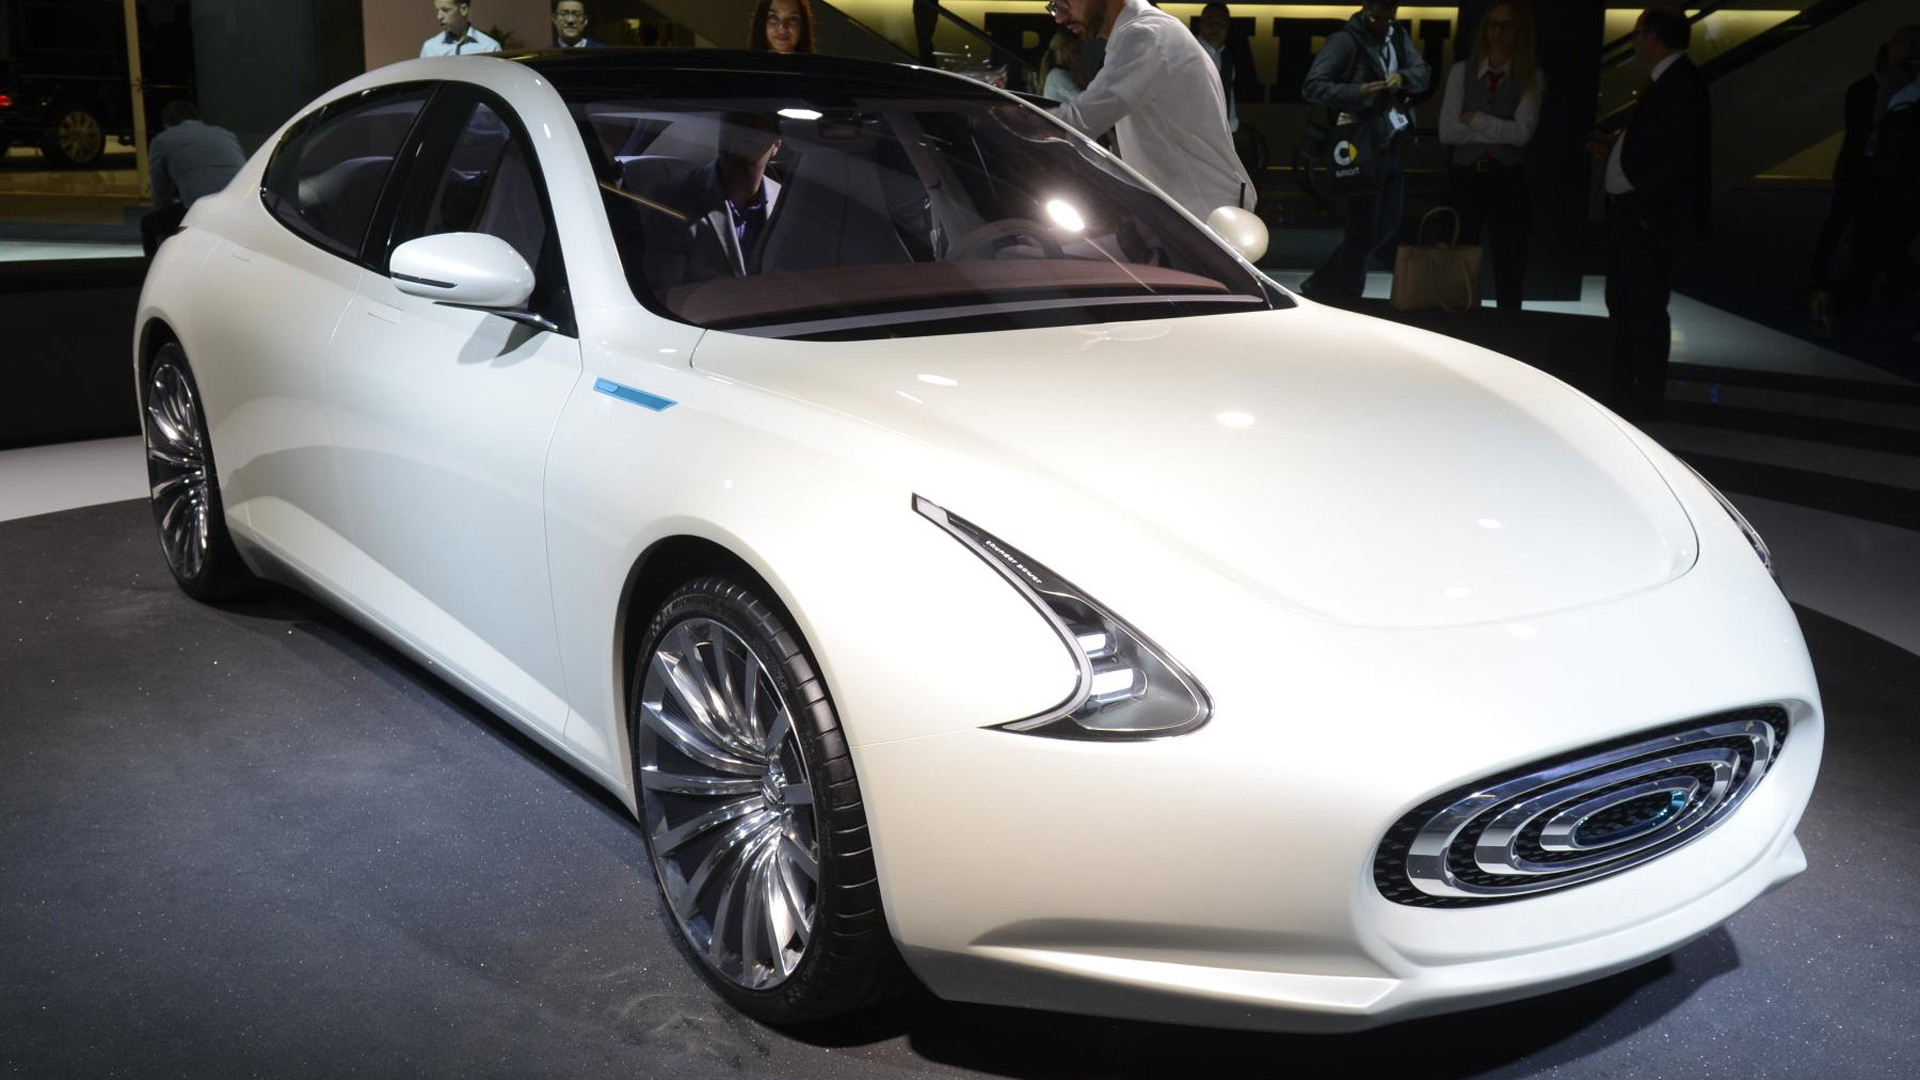 Thunder Power Sedan concept, 2015 Frankfurt Auto Show